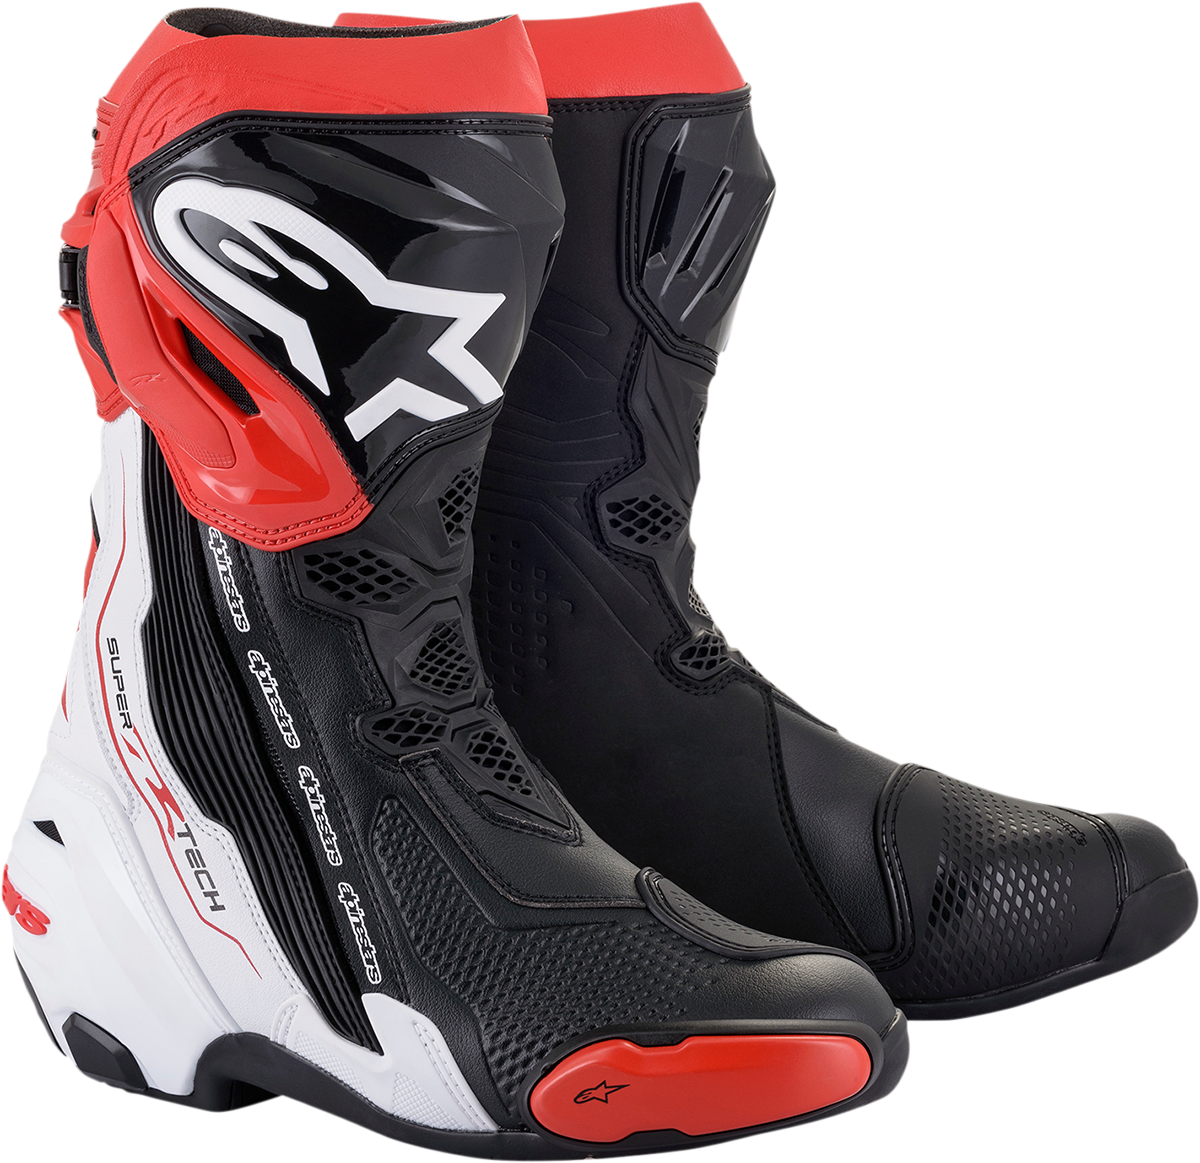 ALPINESTARS Supertech R Boots - Black/White/Red - US 8 / EU 42 2220021-123-42